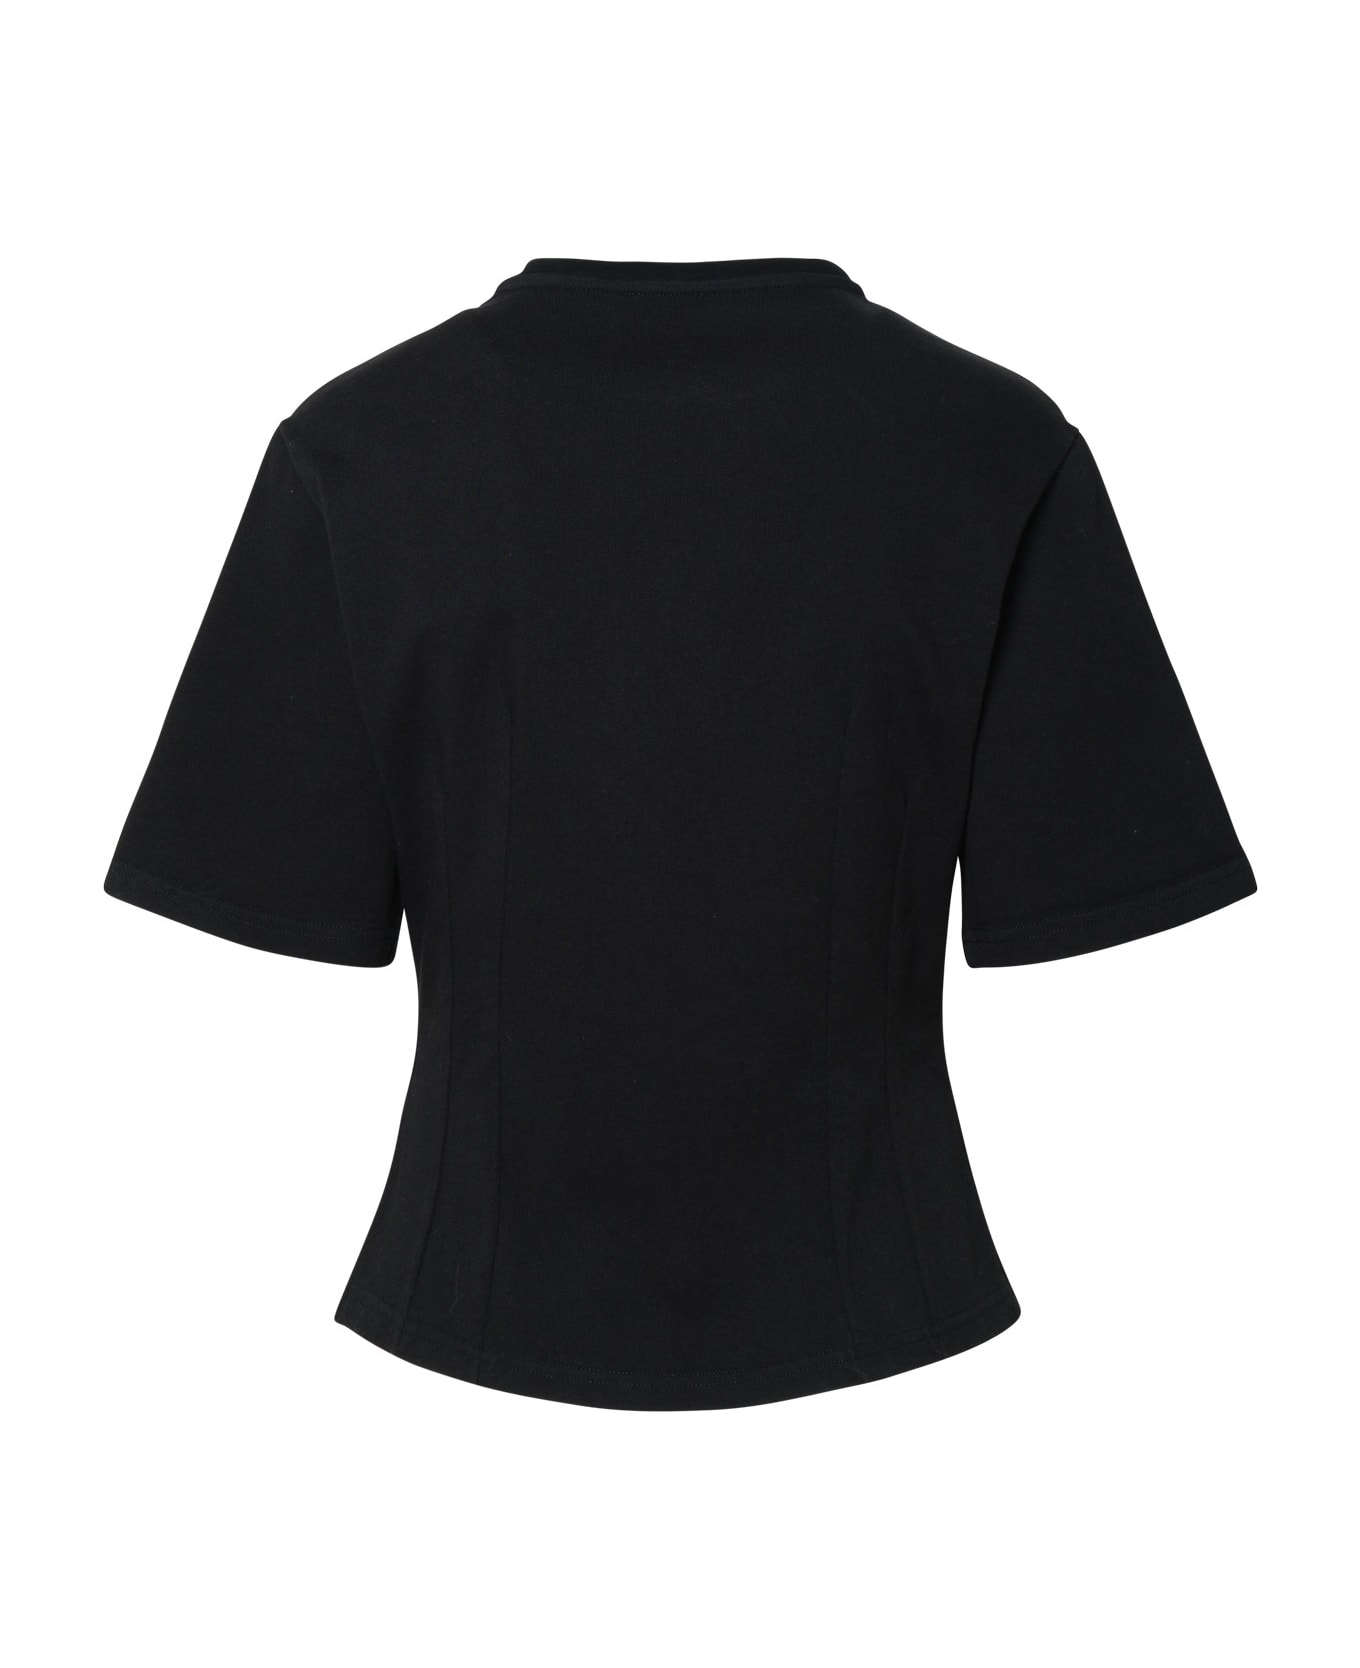 Etro Black Cotton T-shirt - Black